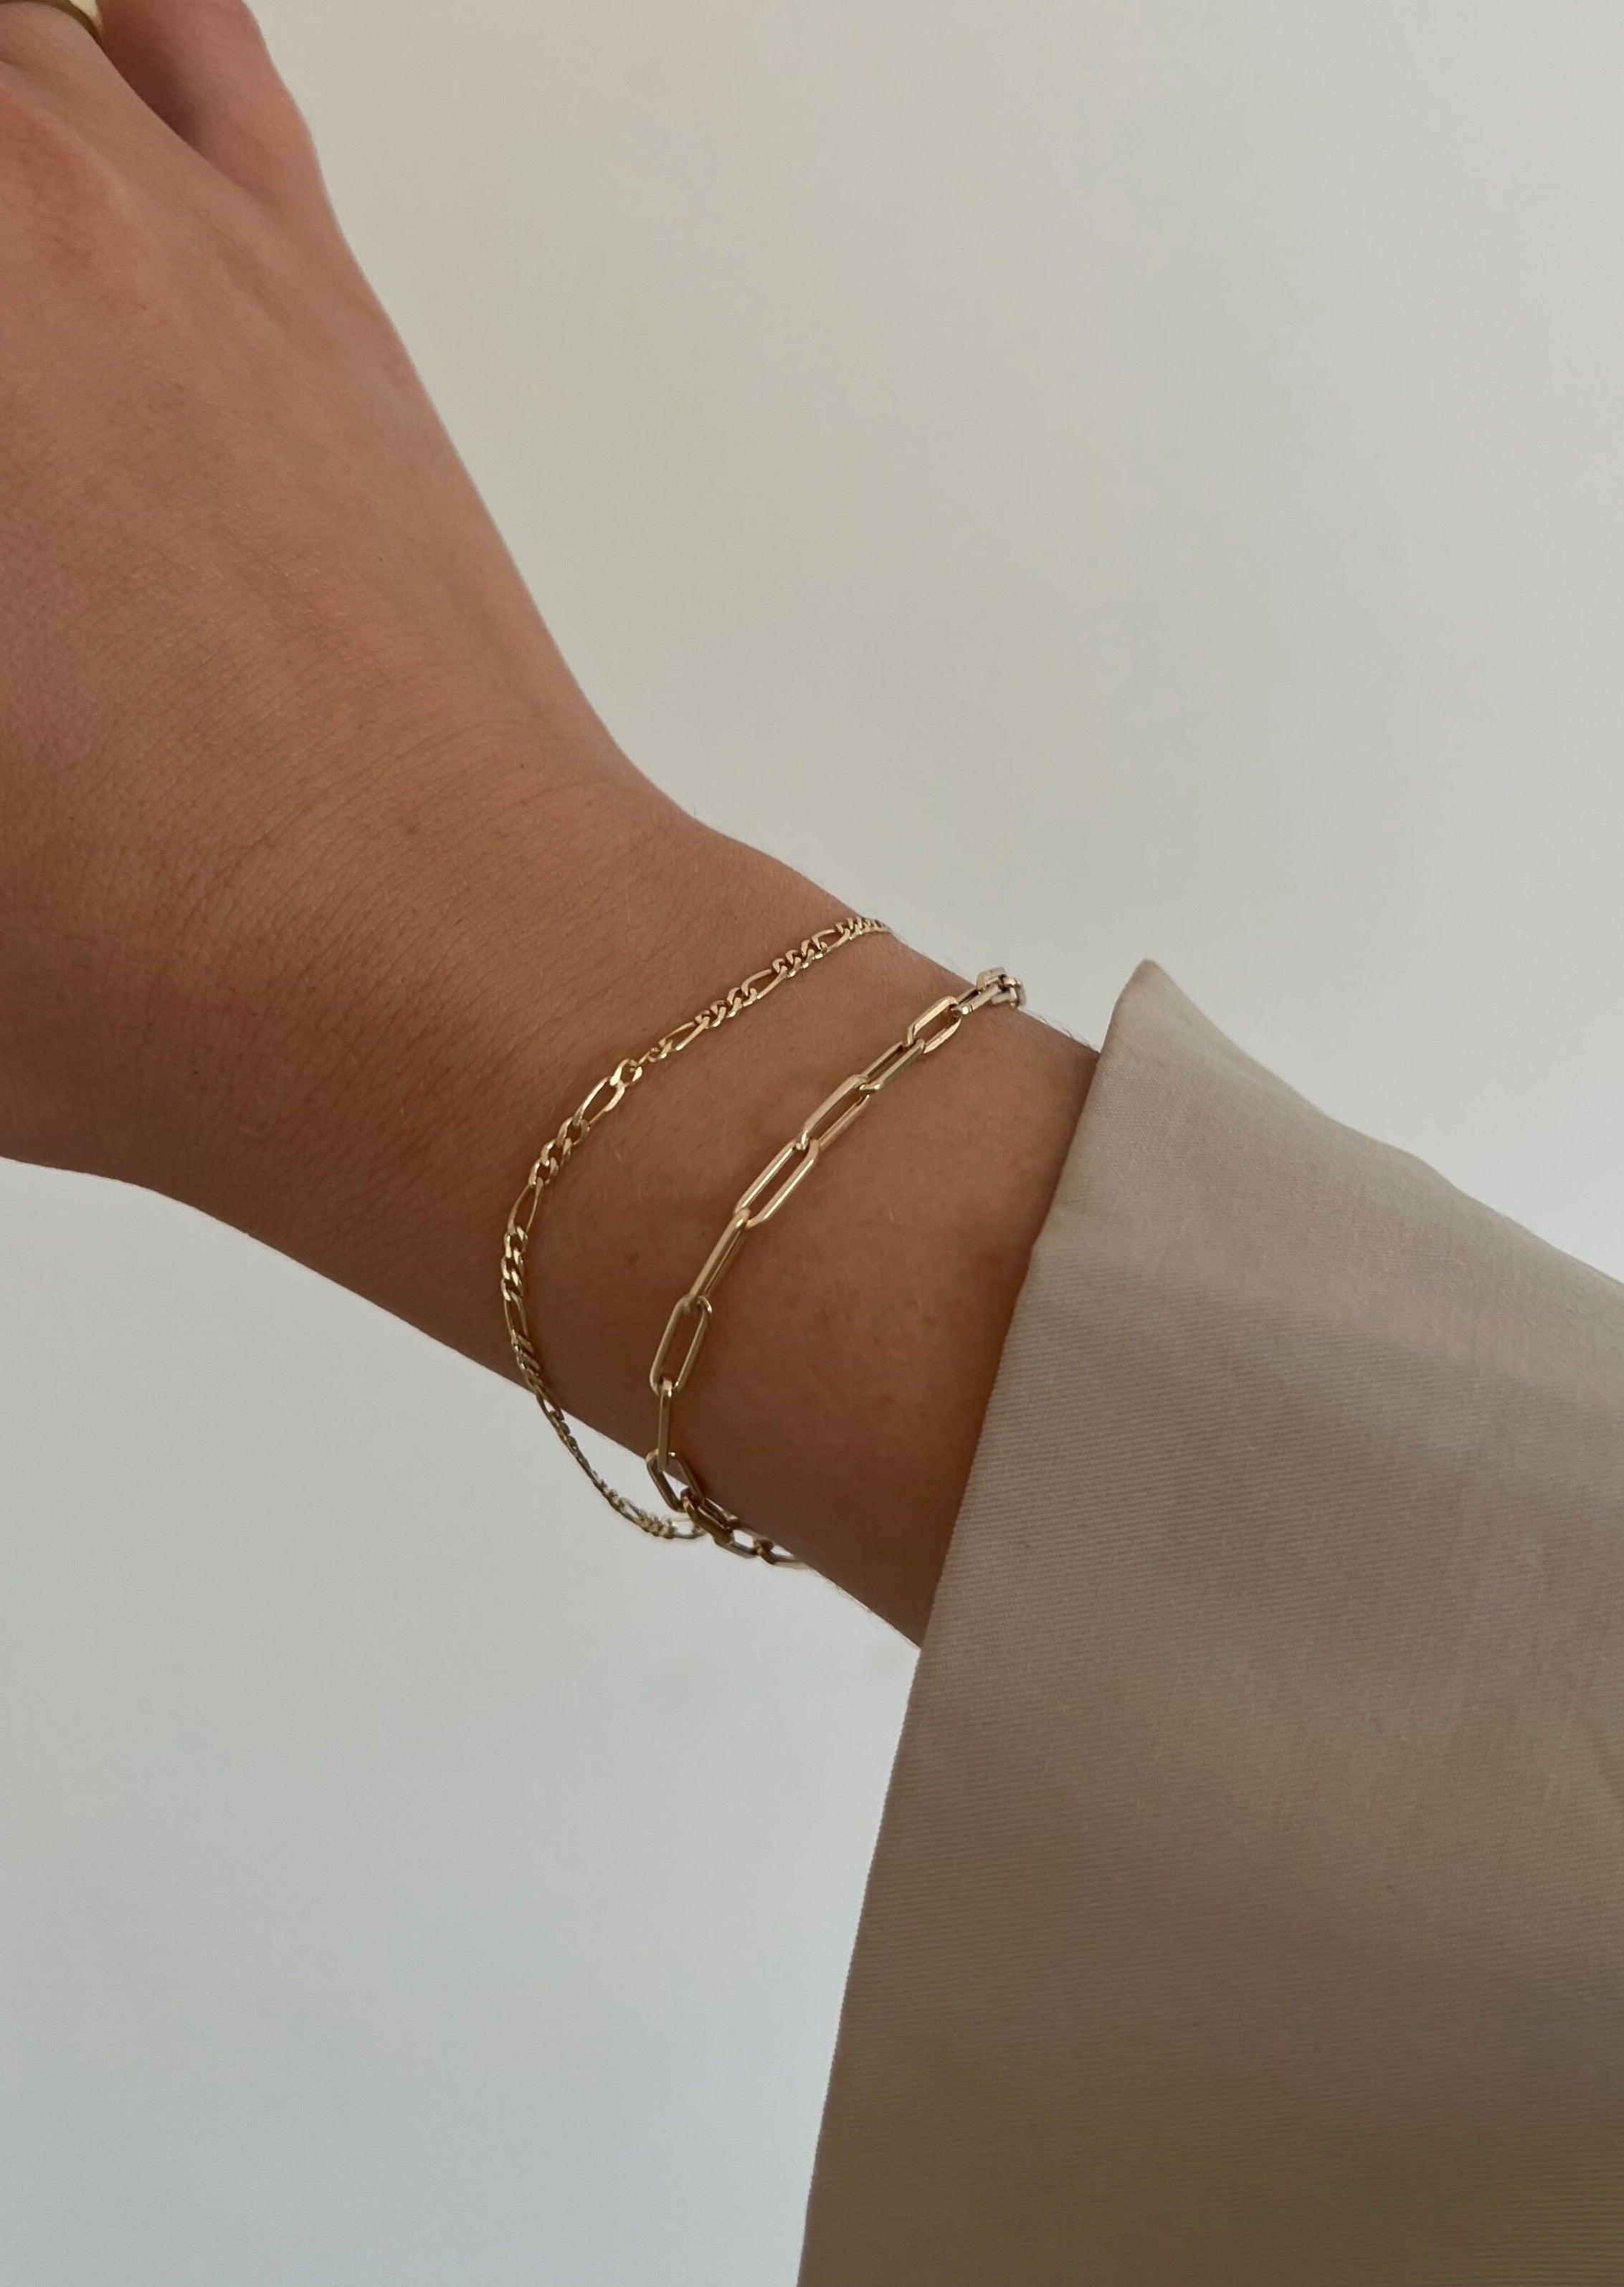 alt="Petite Link Chain Bracelet with kyle figaro bracelet"